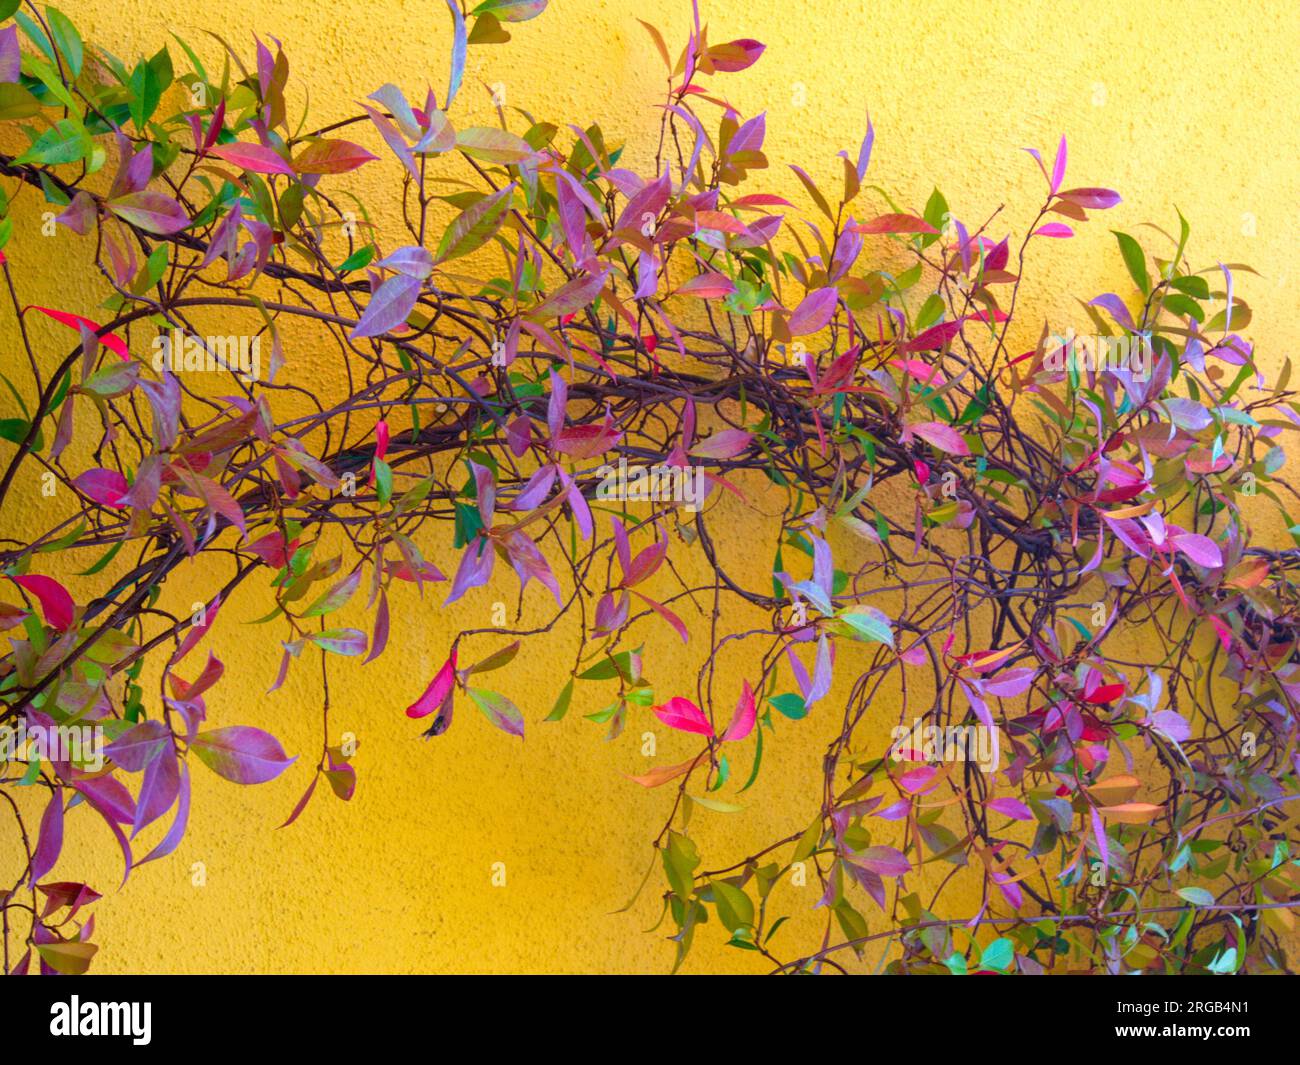 Una pianta con foglie colorate sale sulle pareti del giardino di una casa. Una planta de hojas coloridas se trepa por la Pared del Jardín de una casa Foto Stock